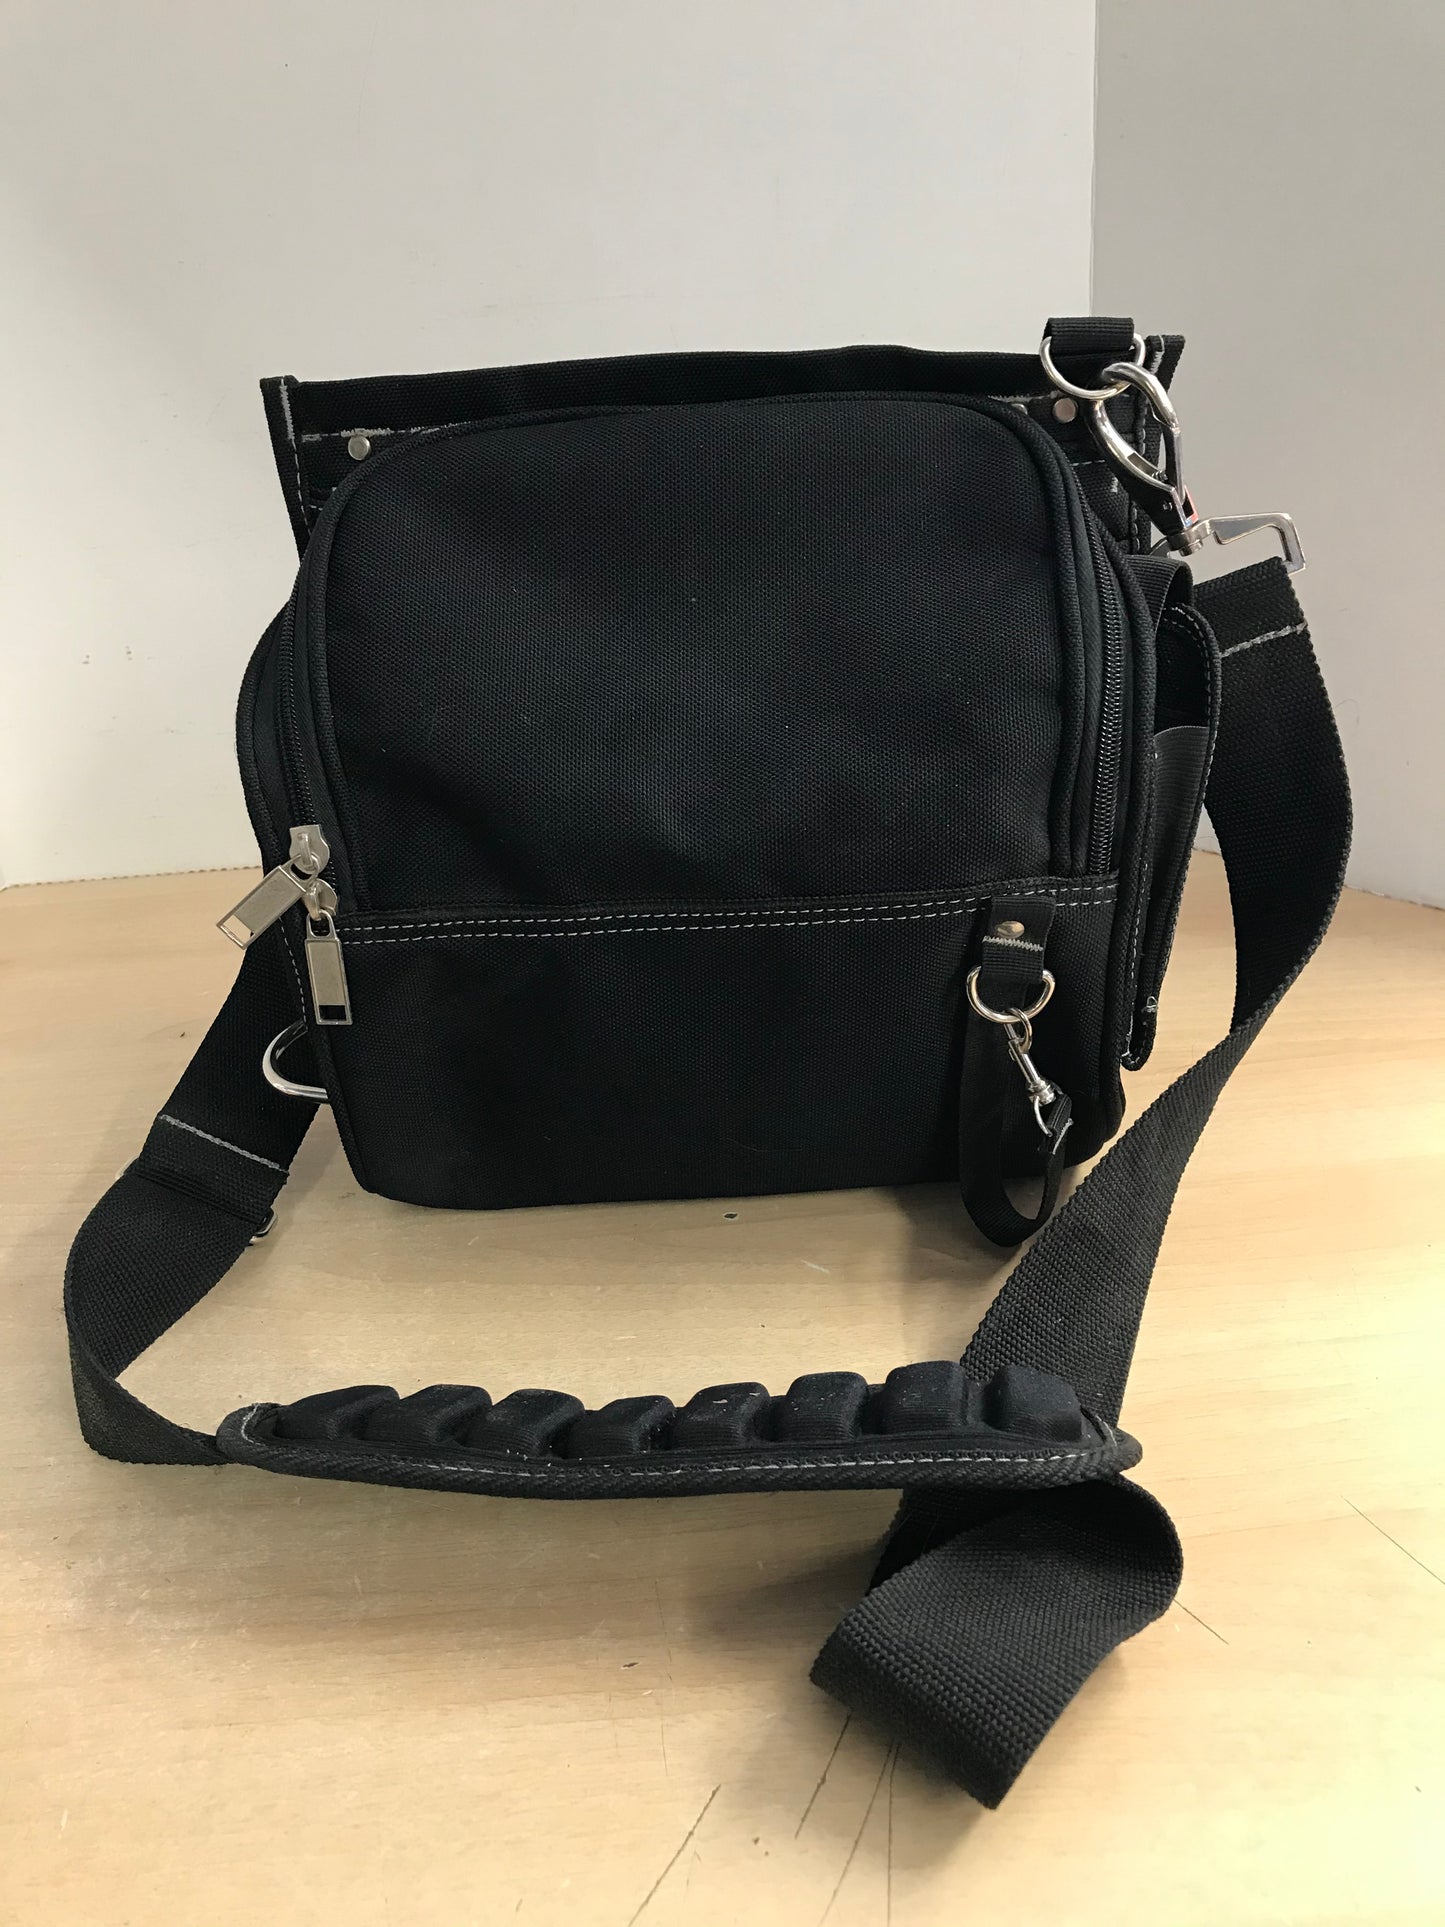 Gatorback Contractor Pro Pocket Zip Top Tool Bag New Fantastic Quality